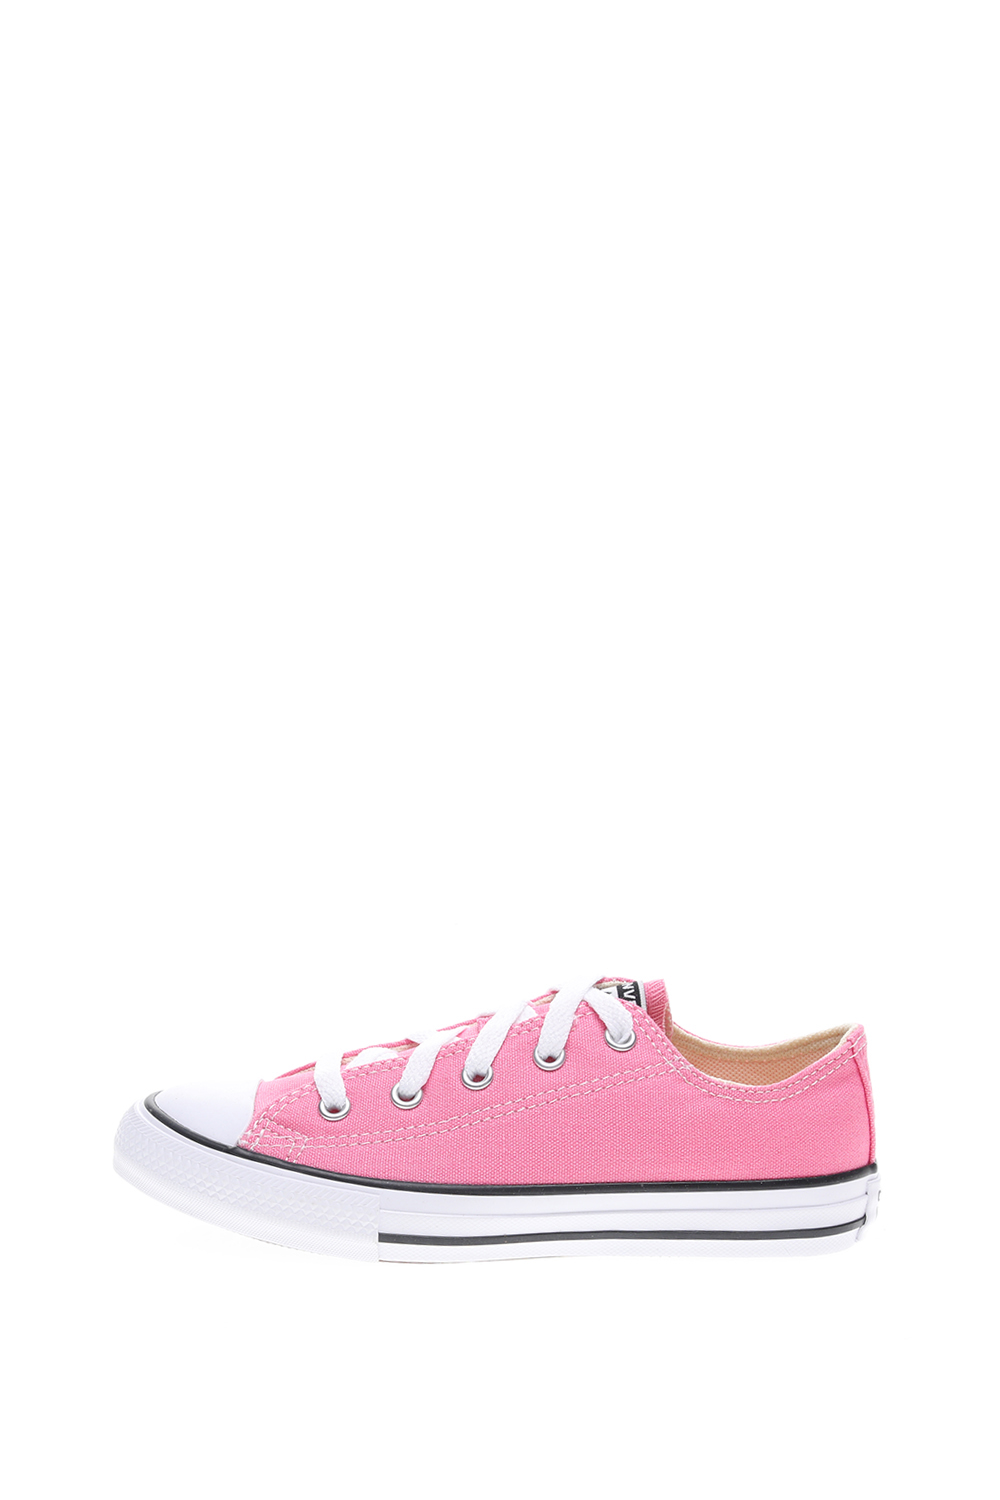 CONVERSE - Παιδικά παπούτσια Chuck Taylor ροζ Παιδικά/Girls/Παπούτσια/Sneakers